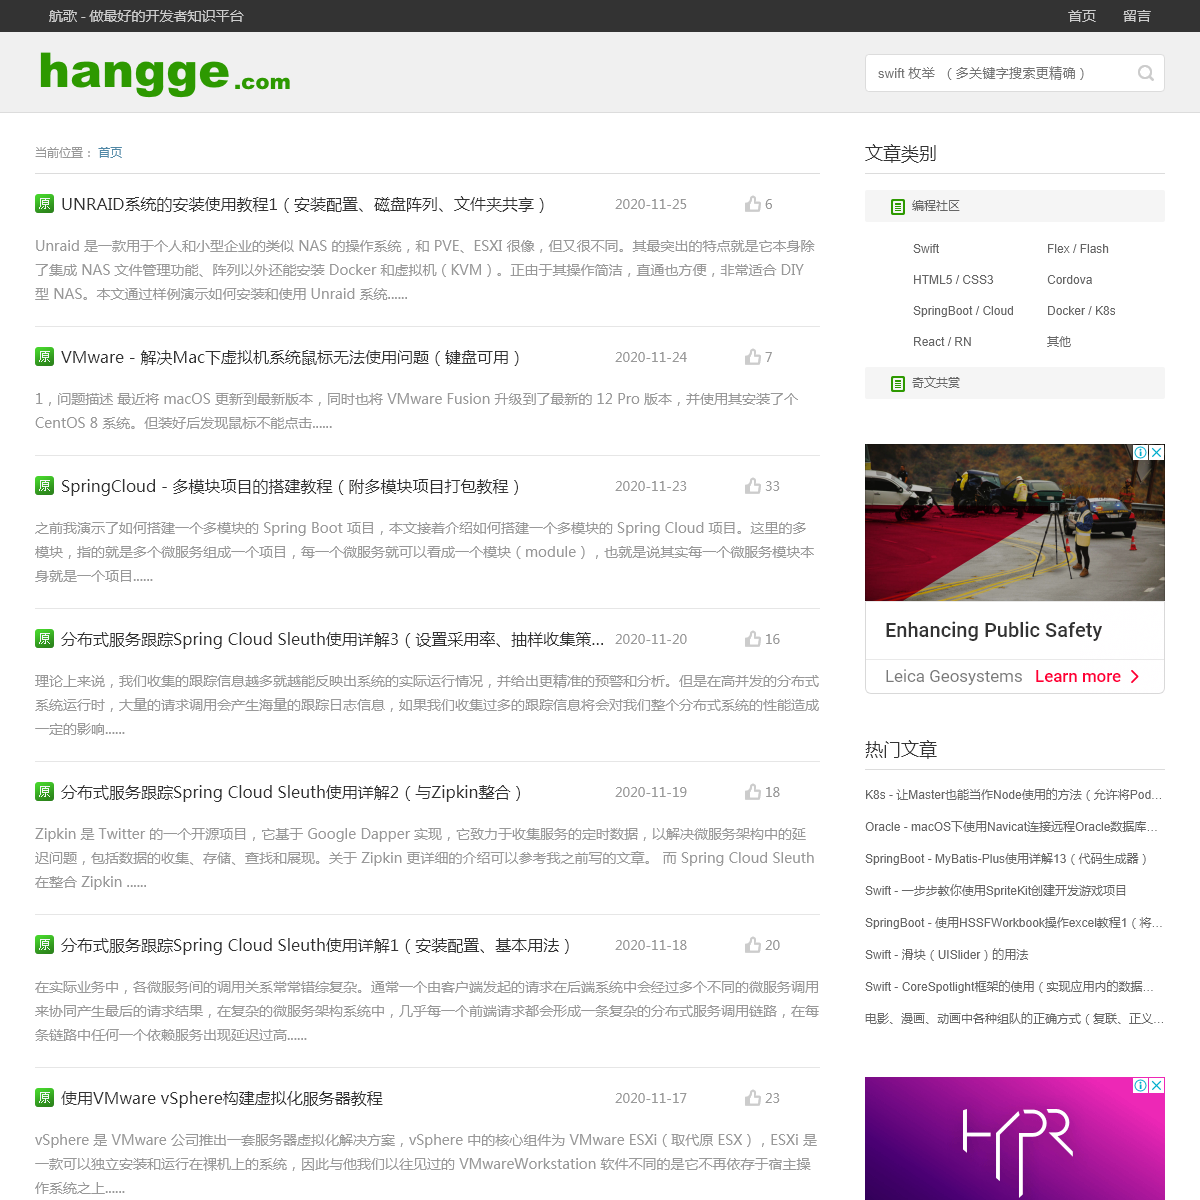 A complete backup of hangge.com